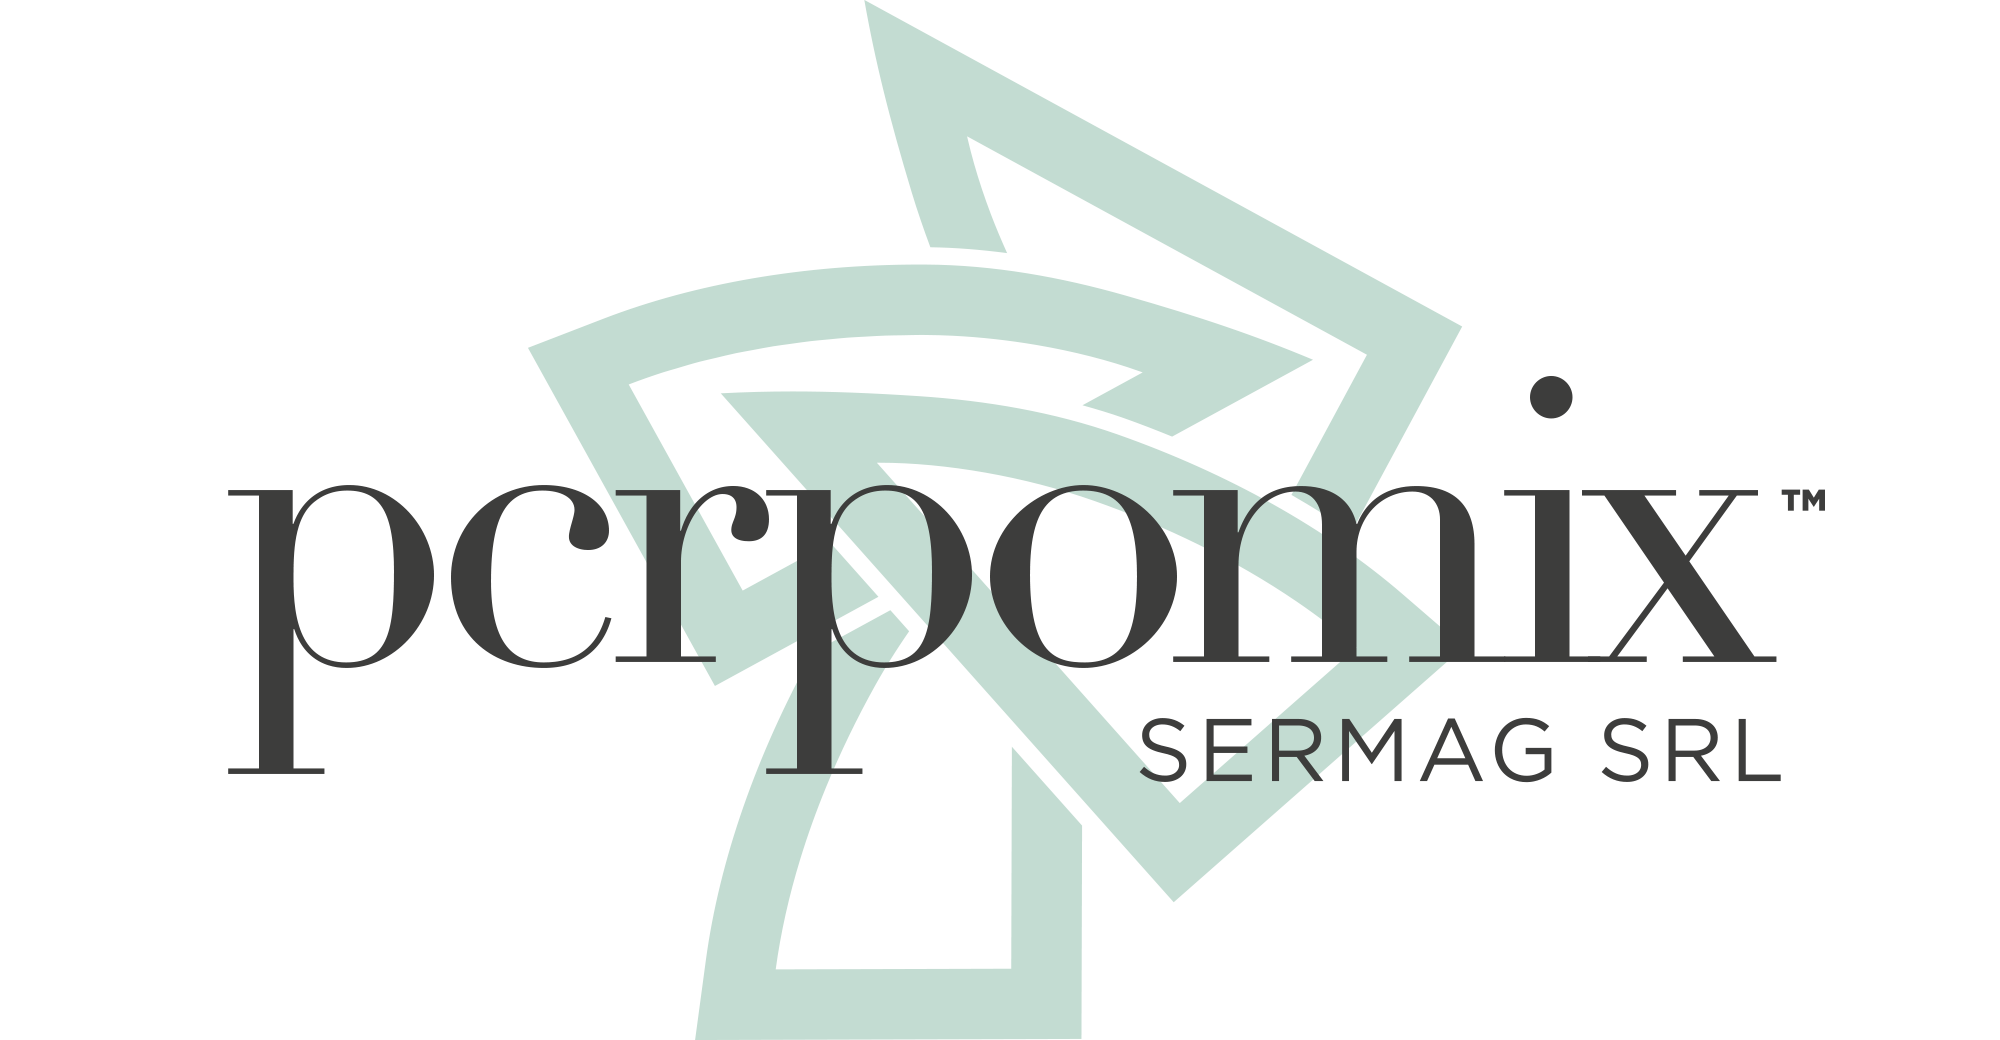 Logo Sermag Pcrpomix